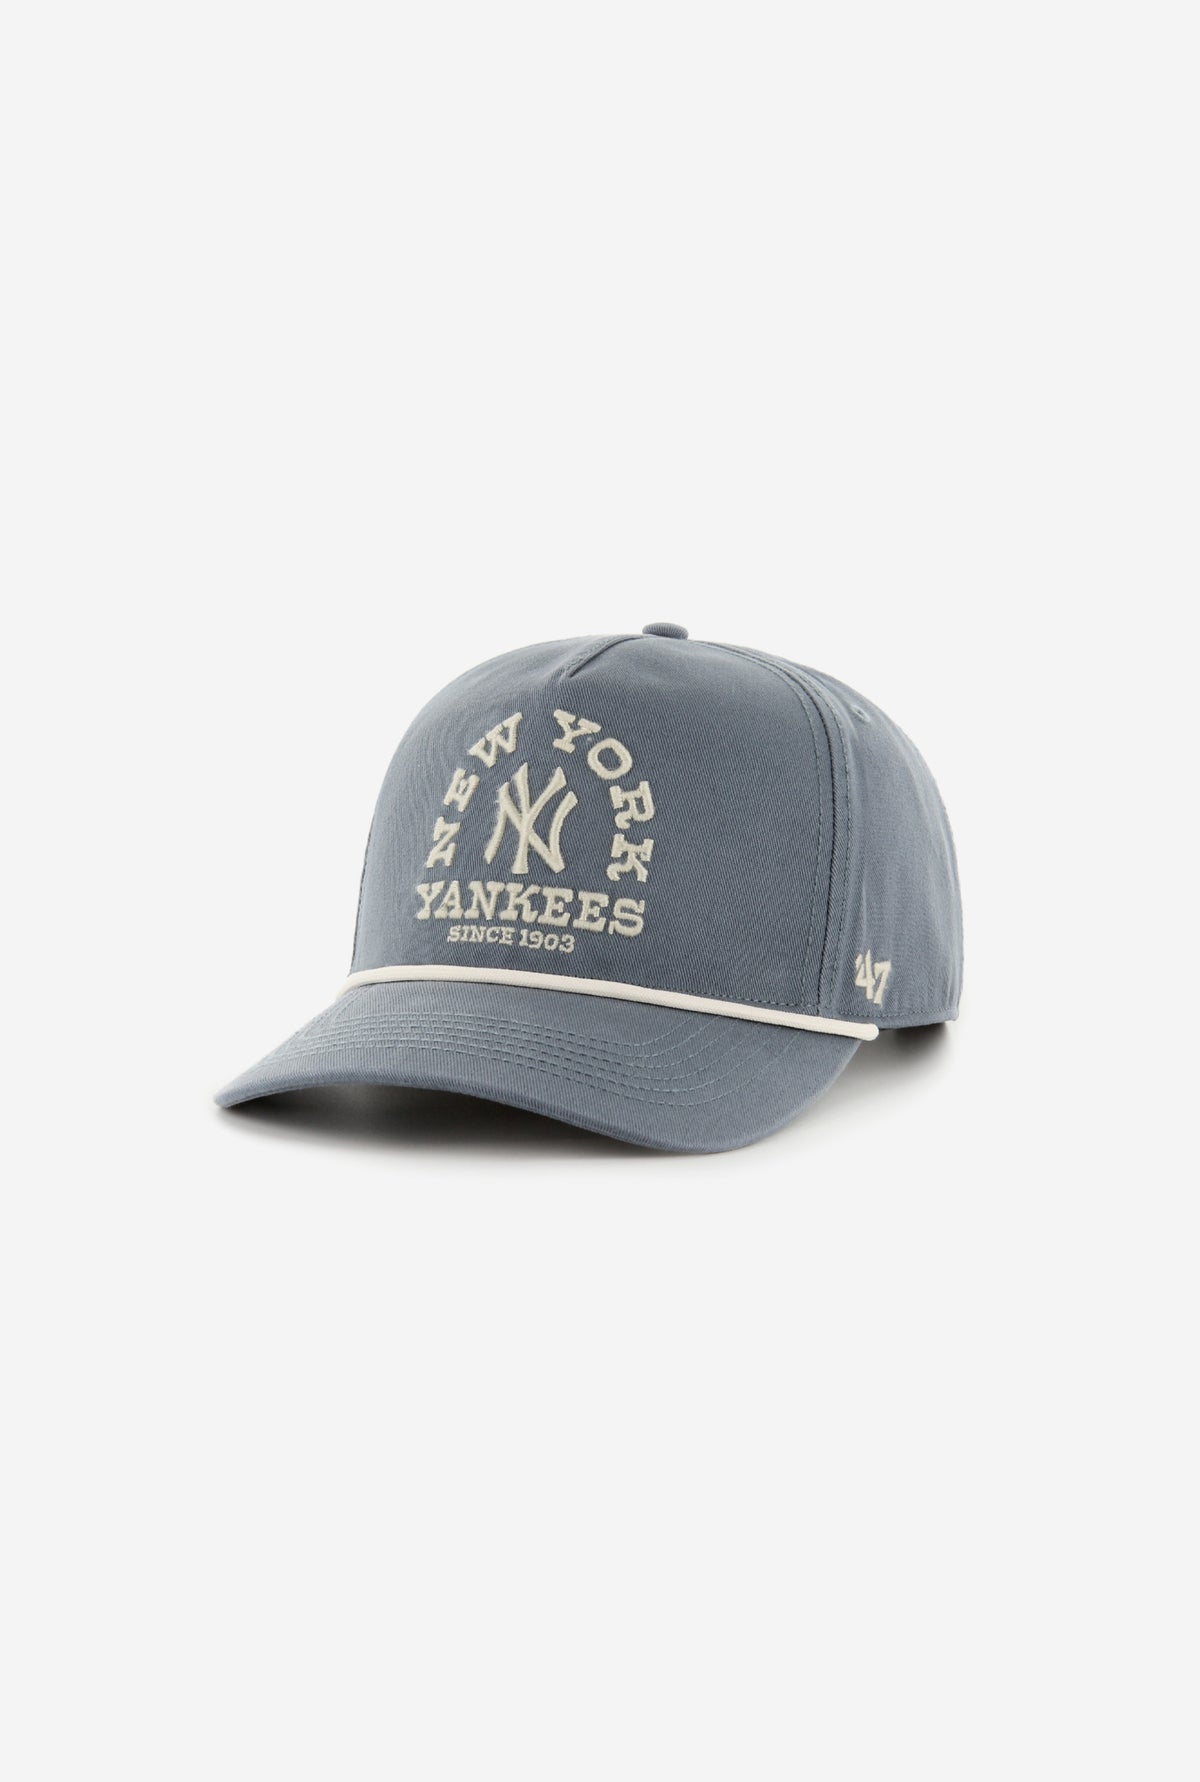 New York Yankees Canyon Ranchero Hitch Hat